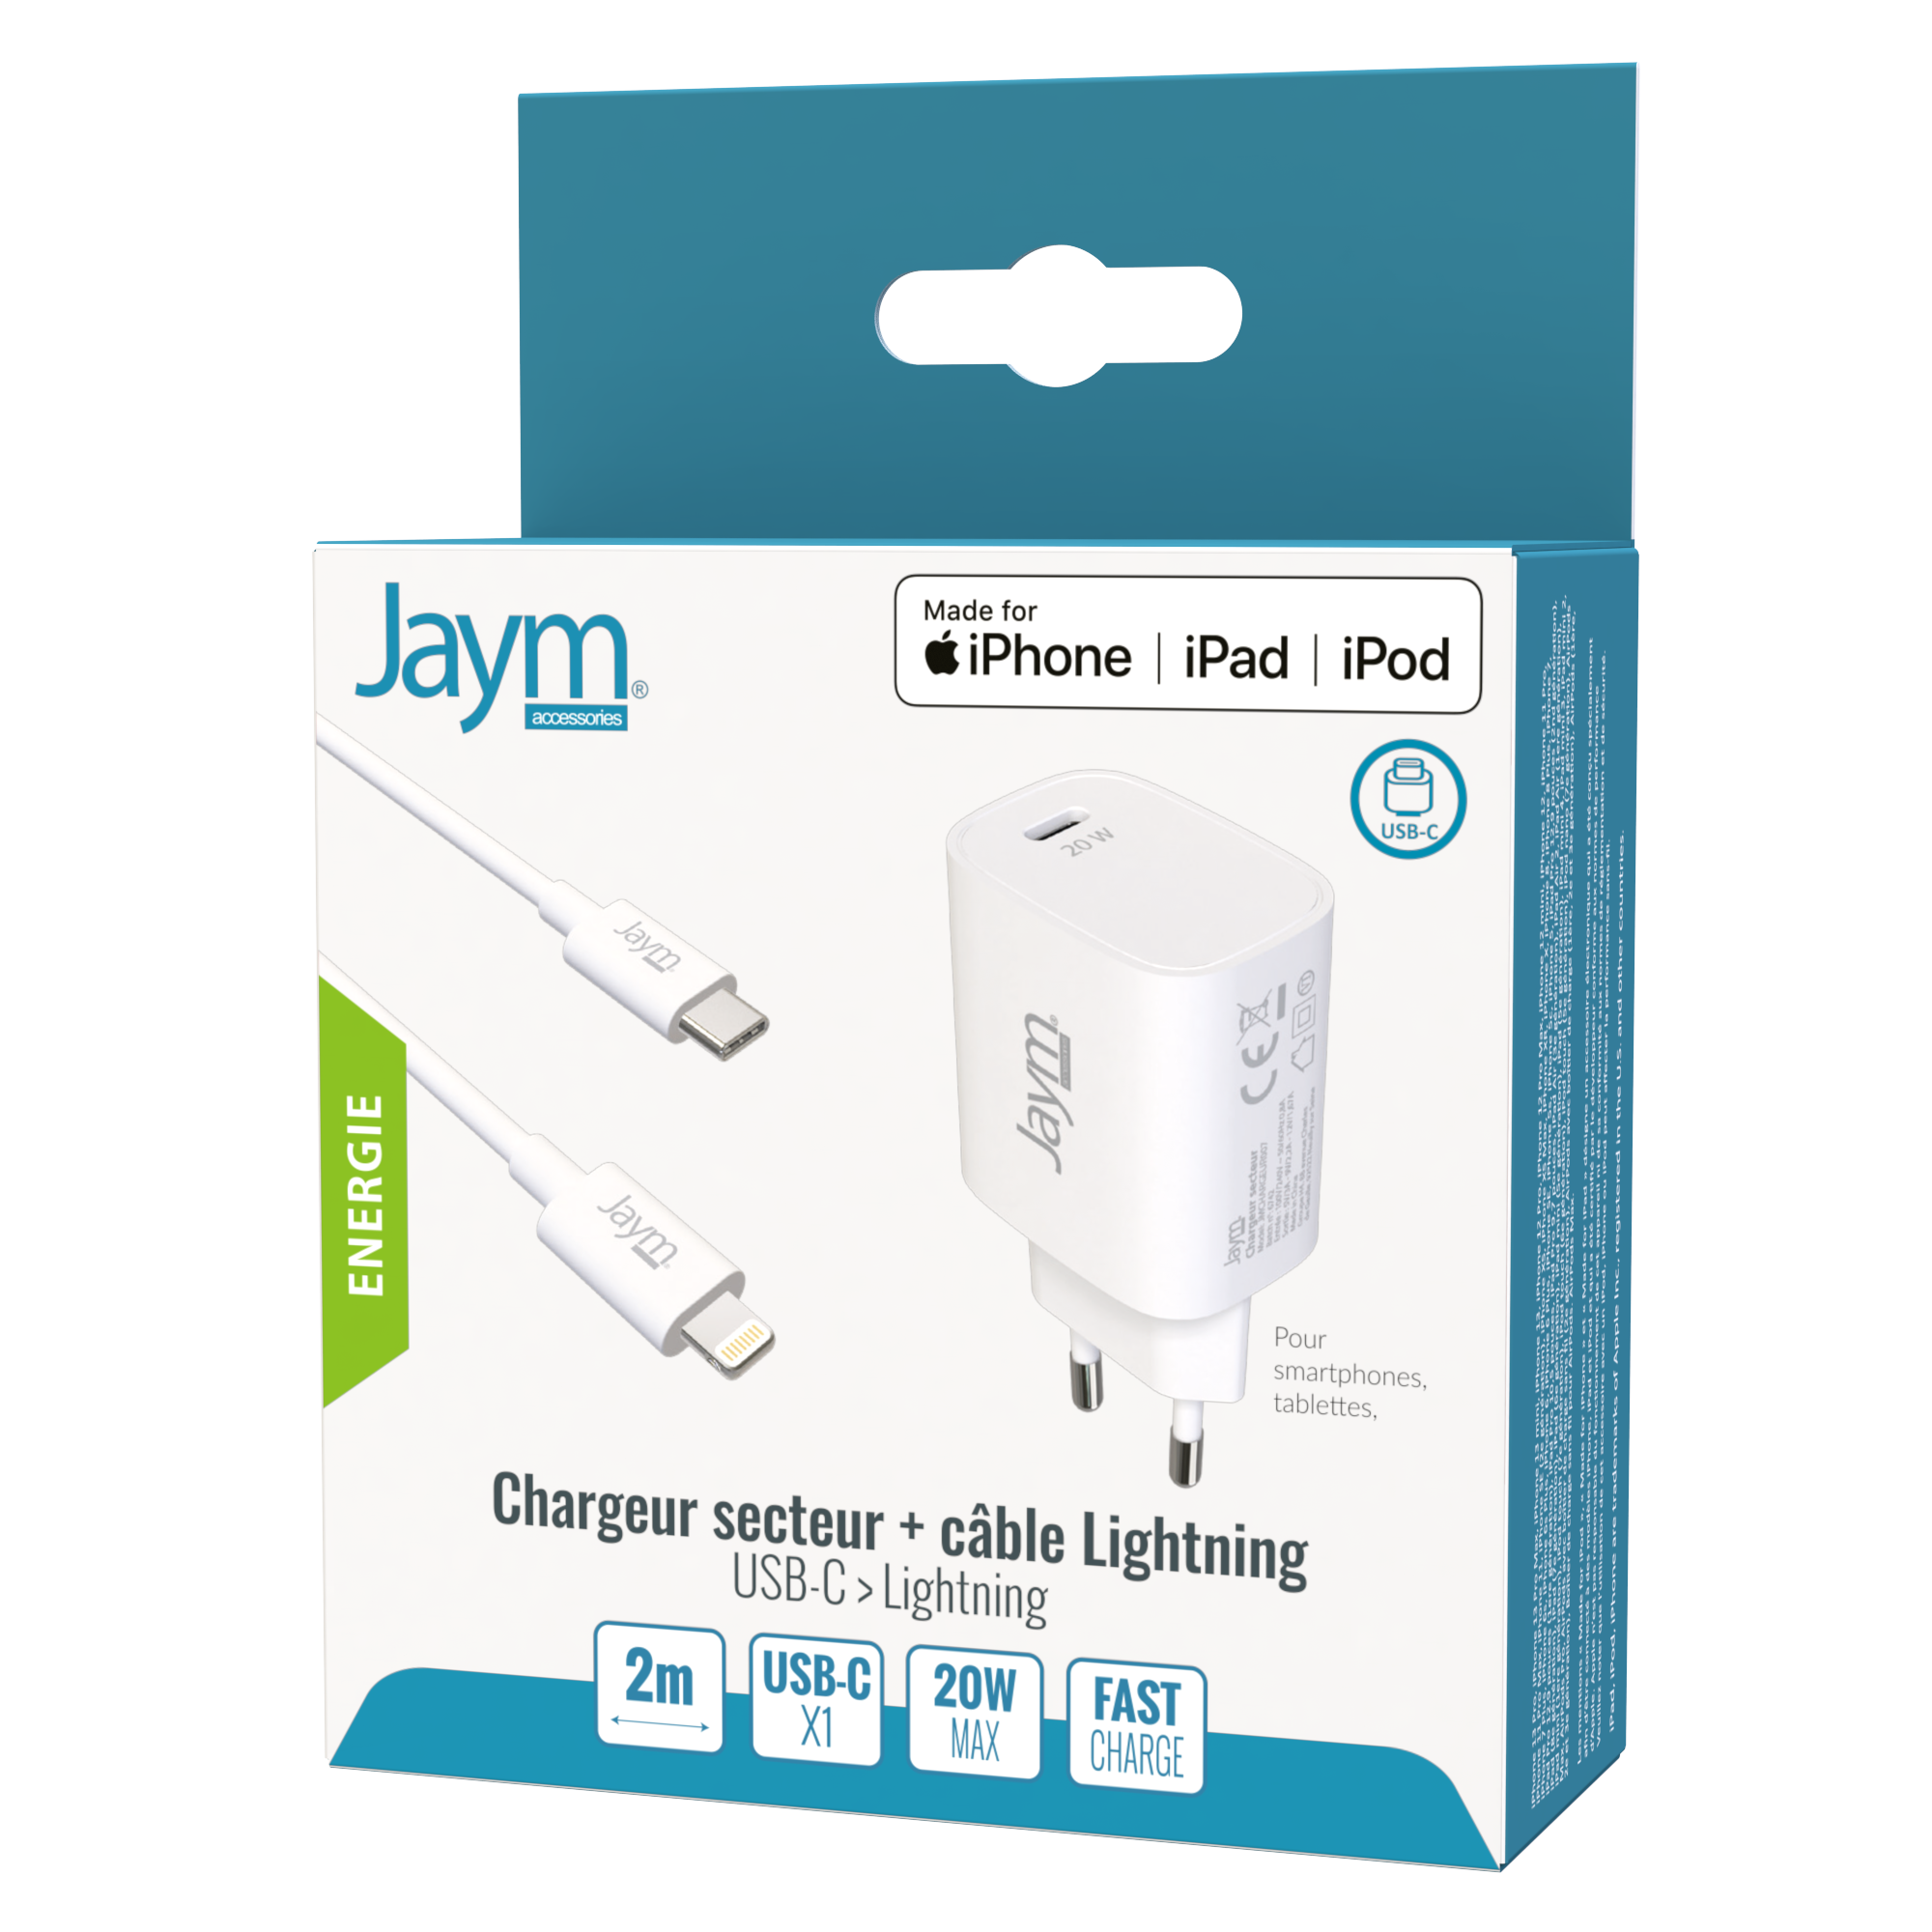 PACK CHARGEUR VOITURE RAPIDE USB-C 30W PD 12/24V + CABLE USB-C VERS TYPE-C  1M NOIRS - JAYM® (JMCOMBO015)